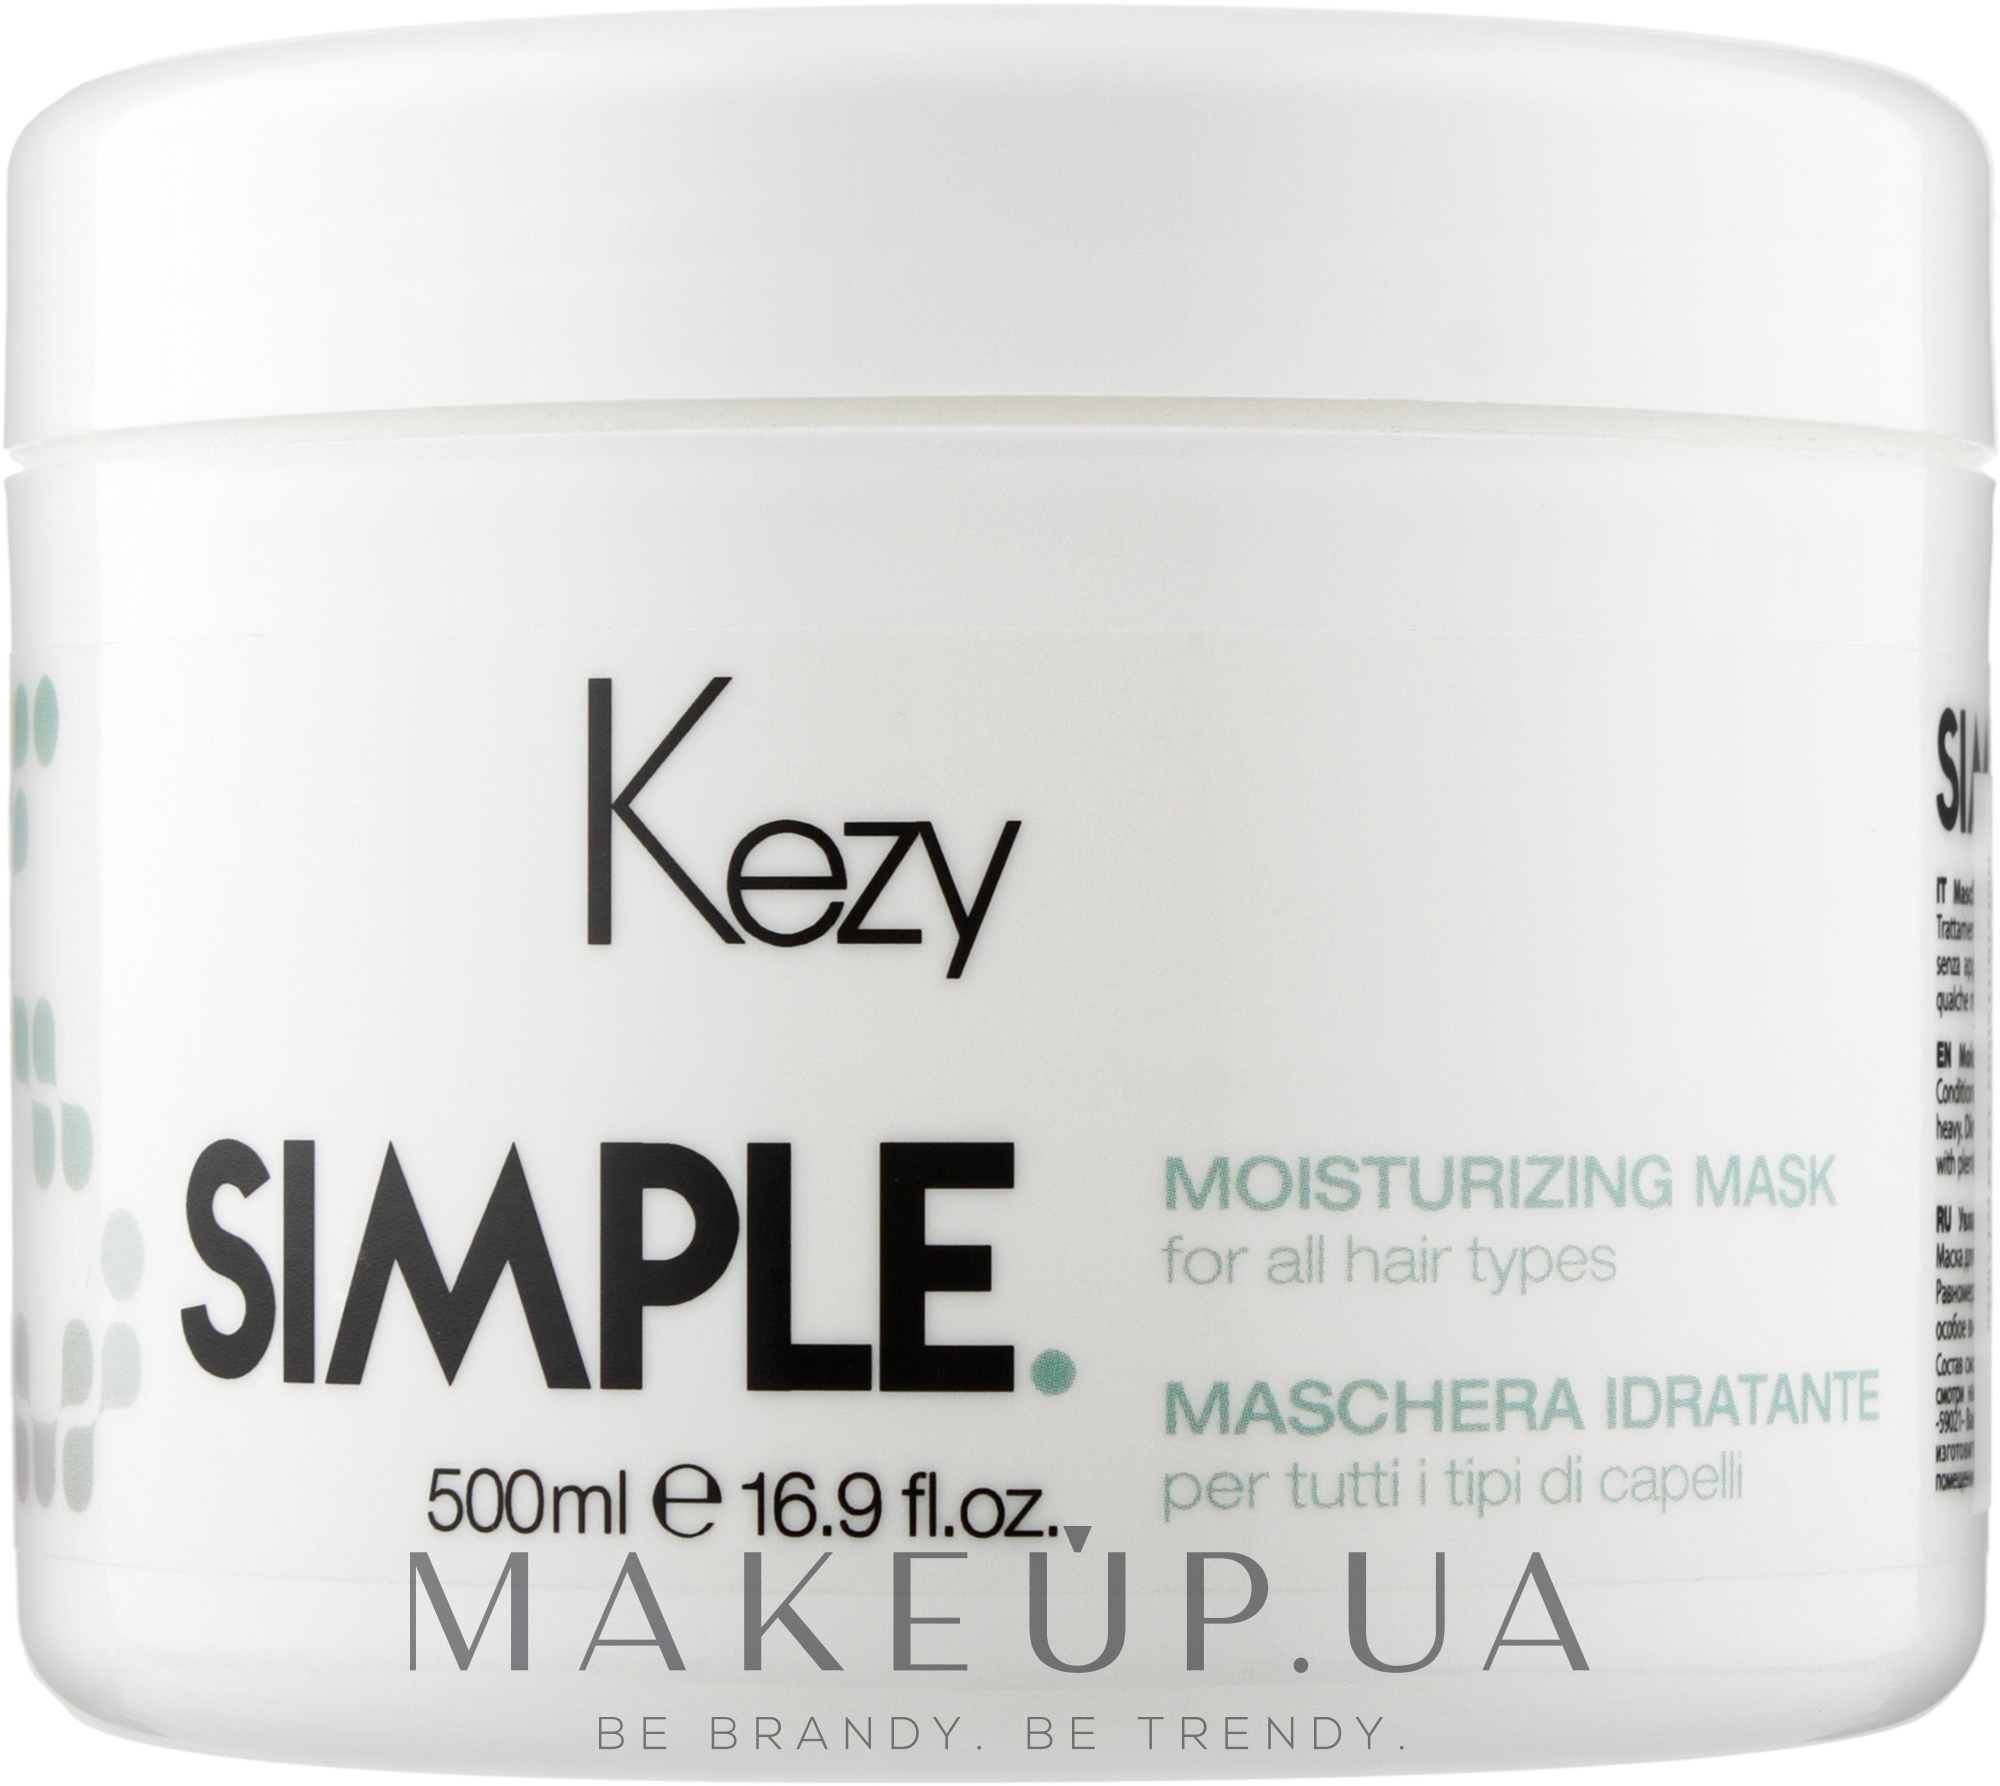 Увлажняющая маска для волос - Kezy Simple Moisturizing Mask  — фото 500ml